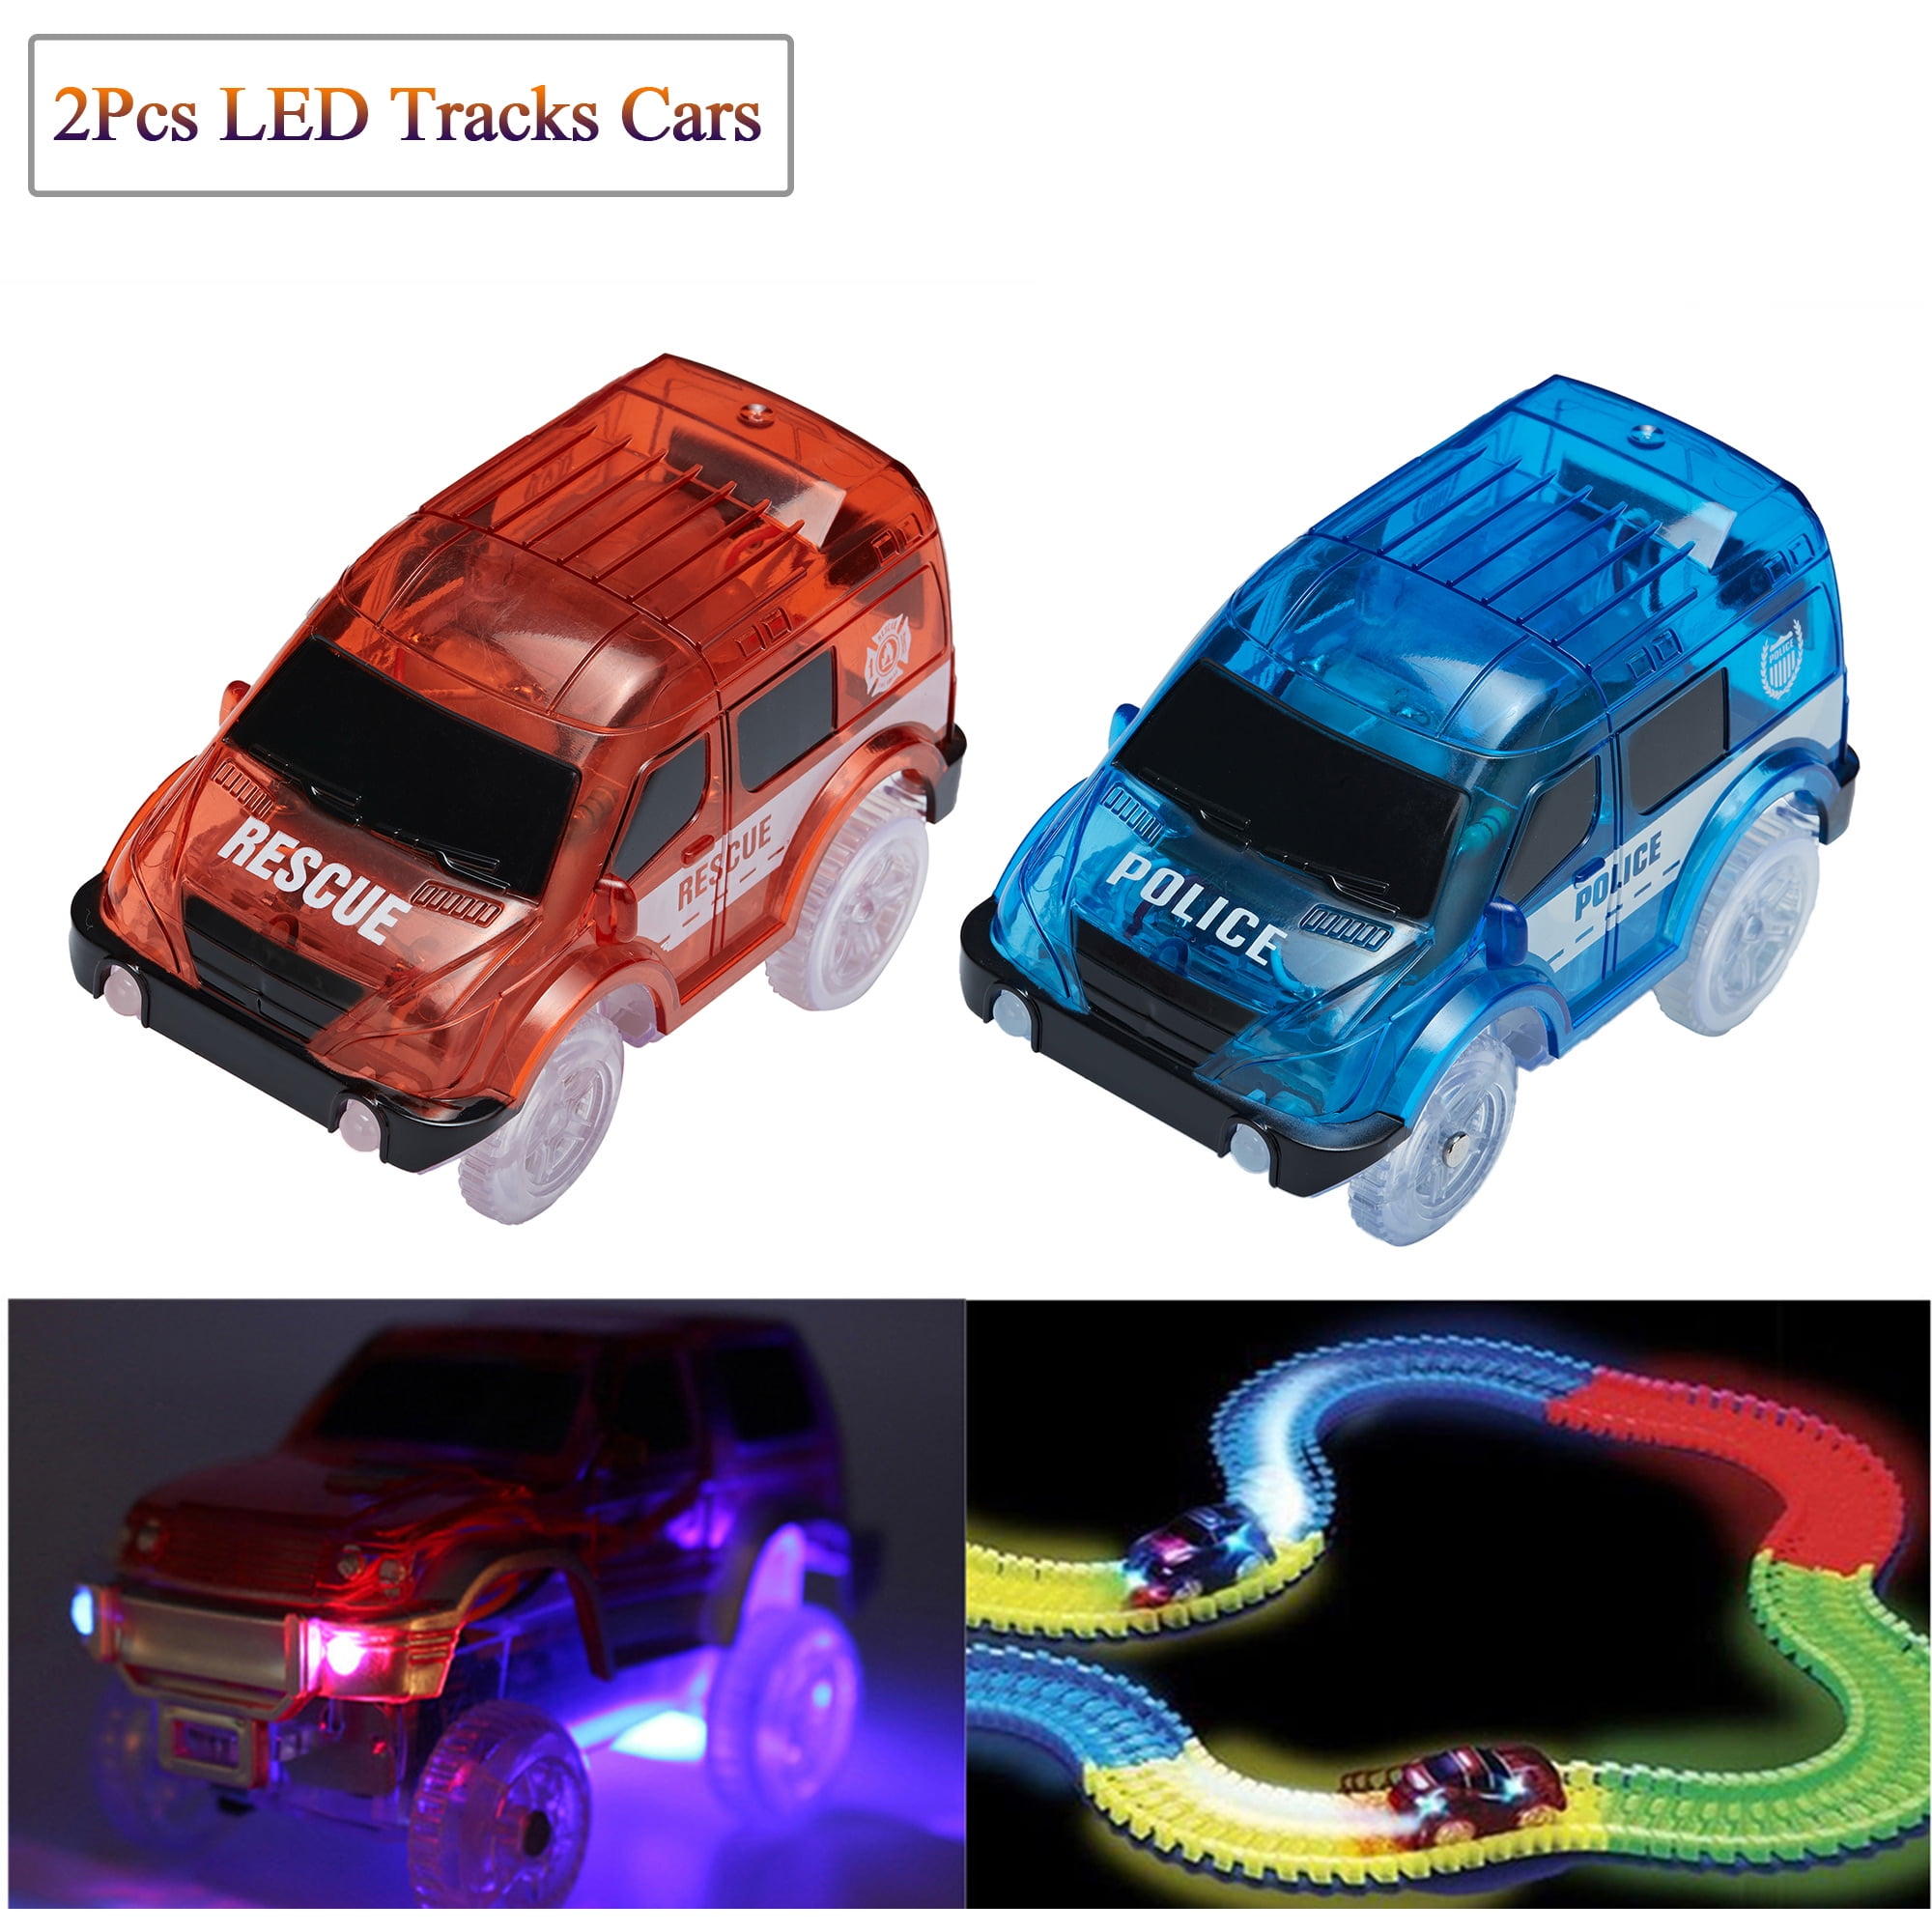 LED Cars Magic Track Electronics Car Educational Toys with Flashing Lights Funny 